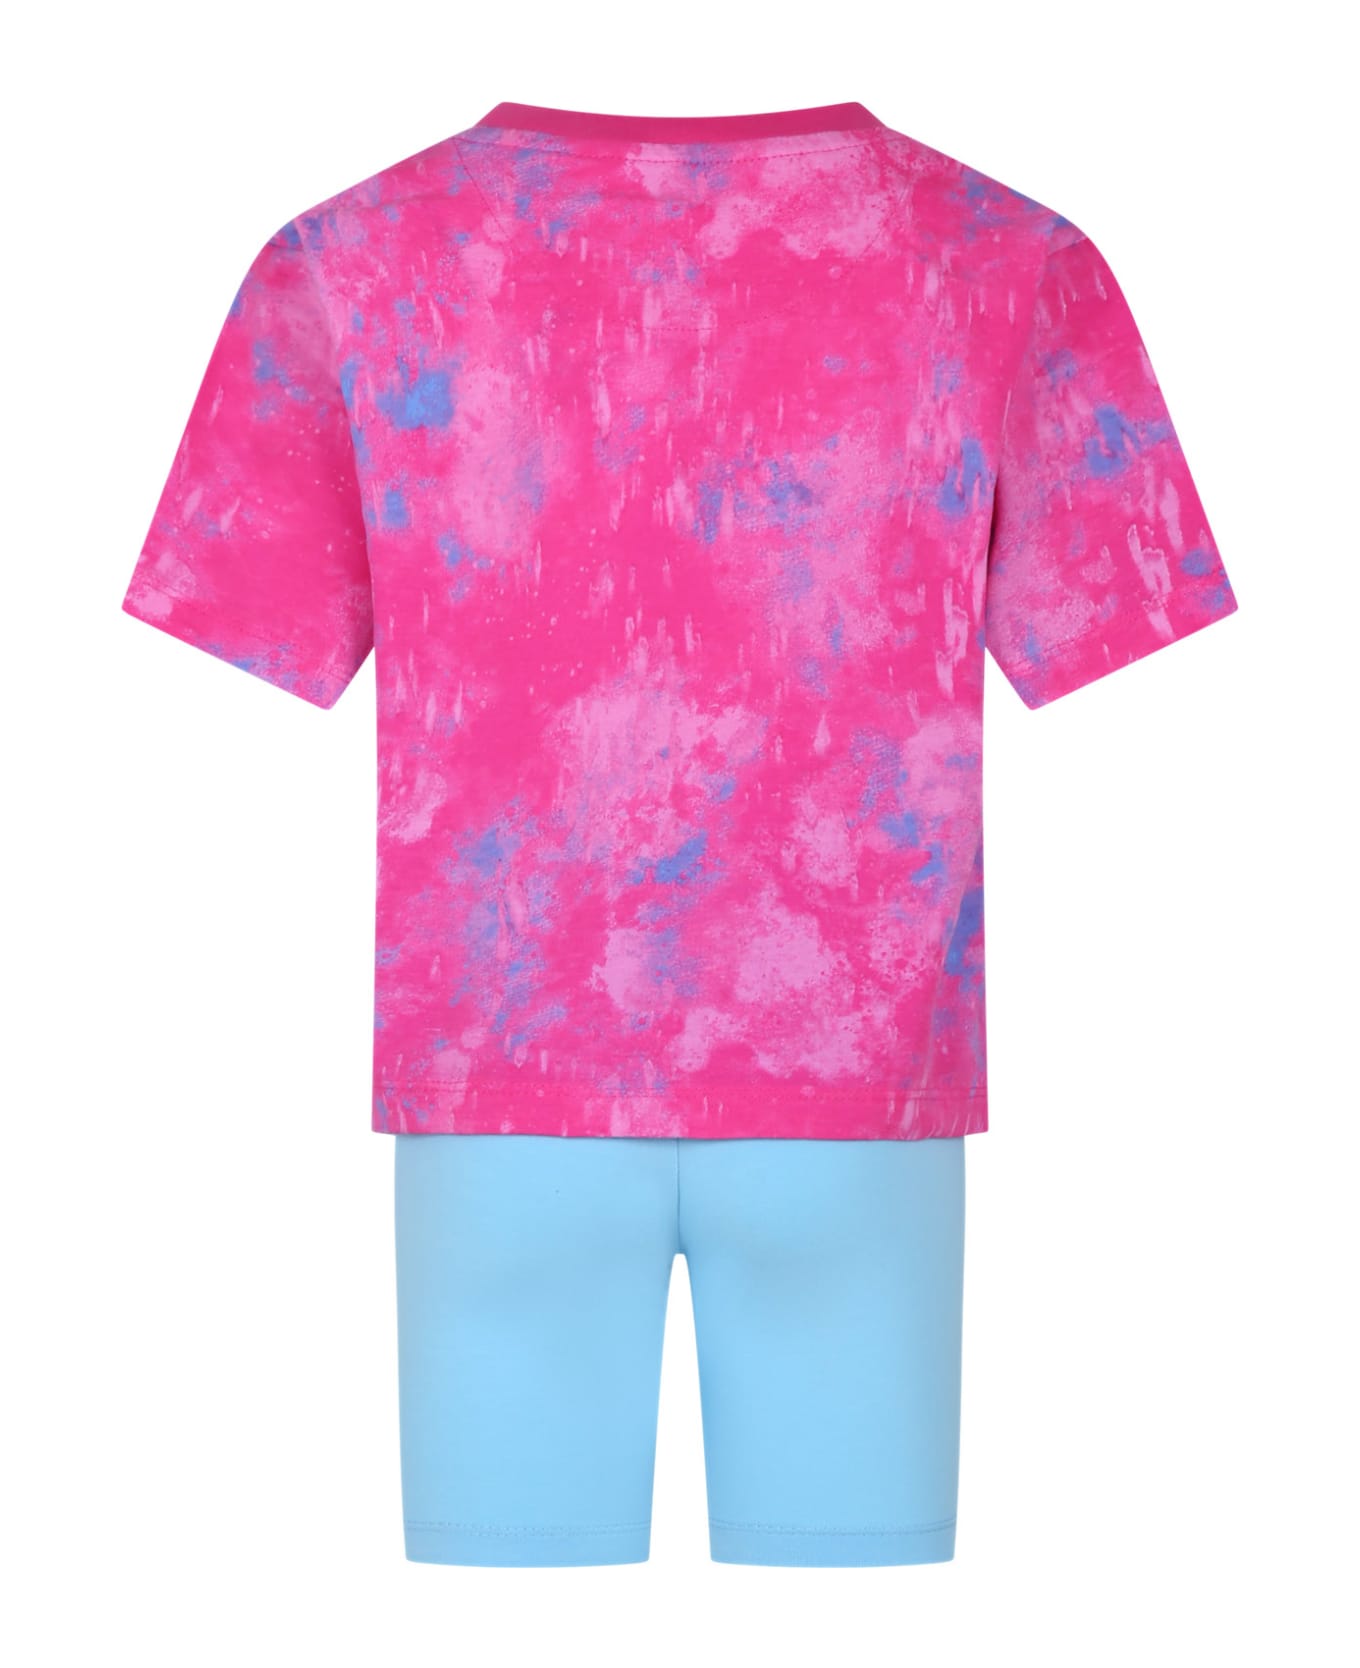 Nike Fuchsia T-shirt For Girl With Logo - Multicolor ジャンプスーツ